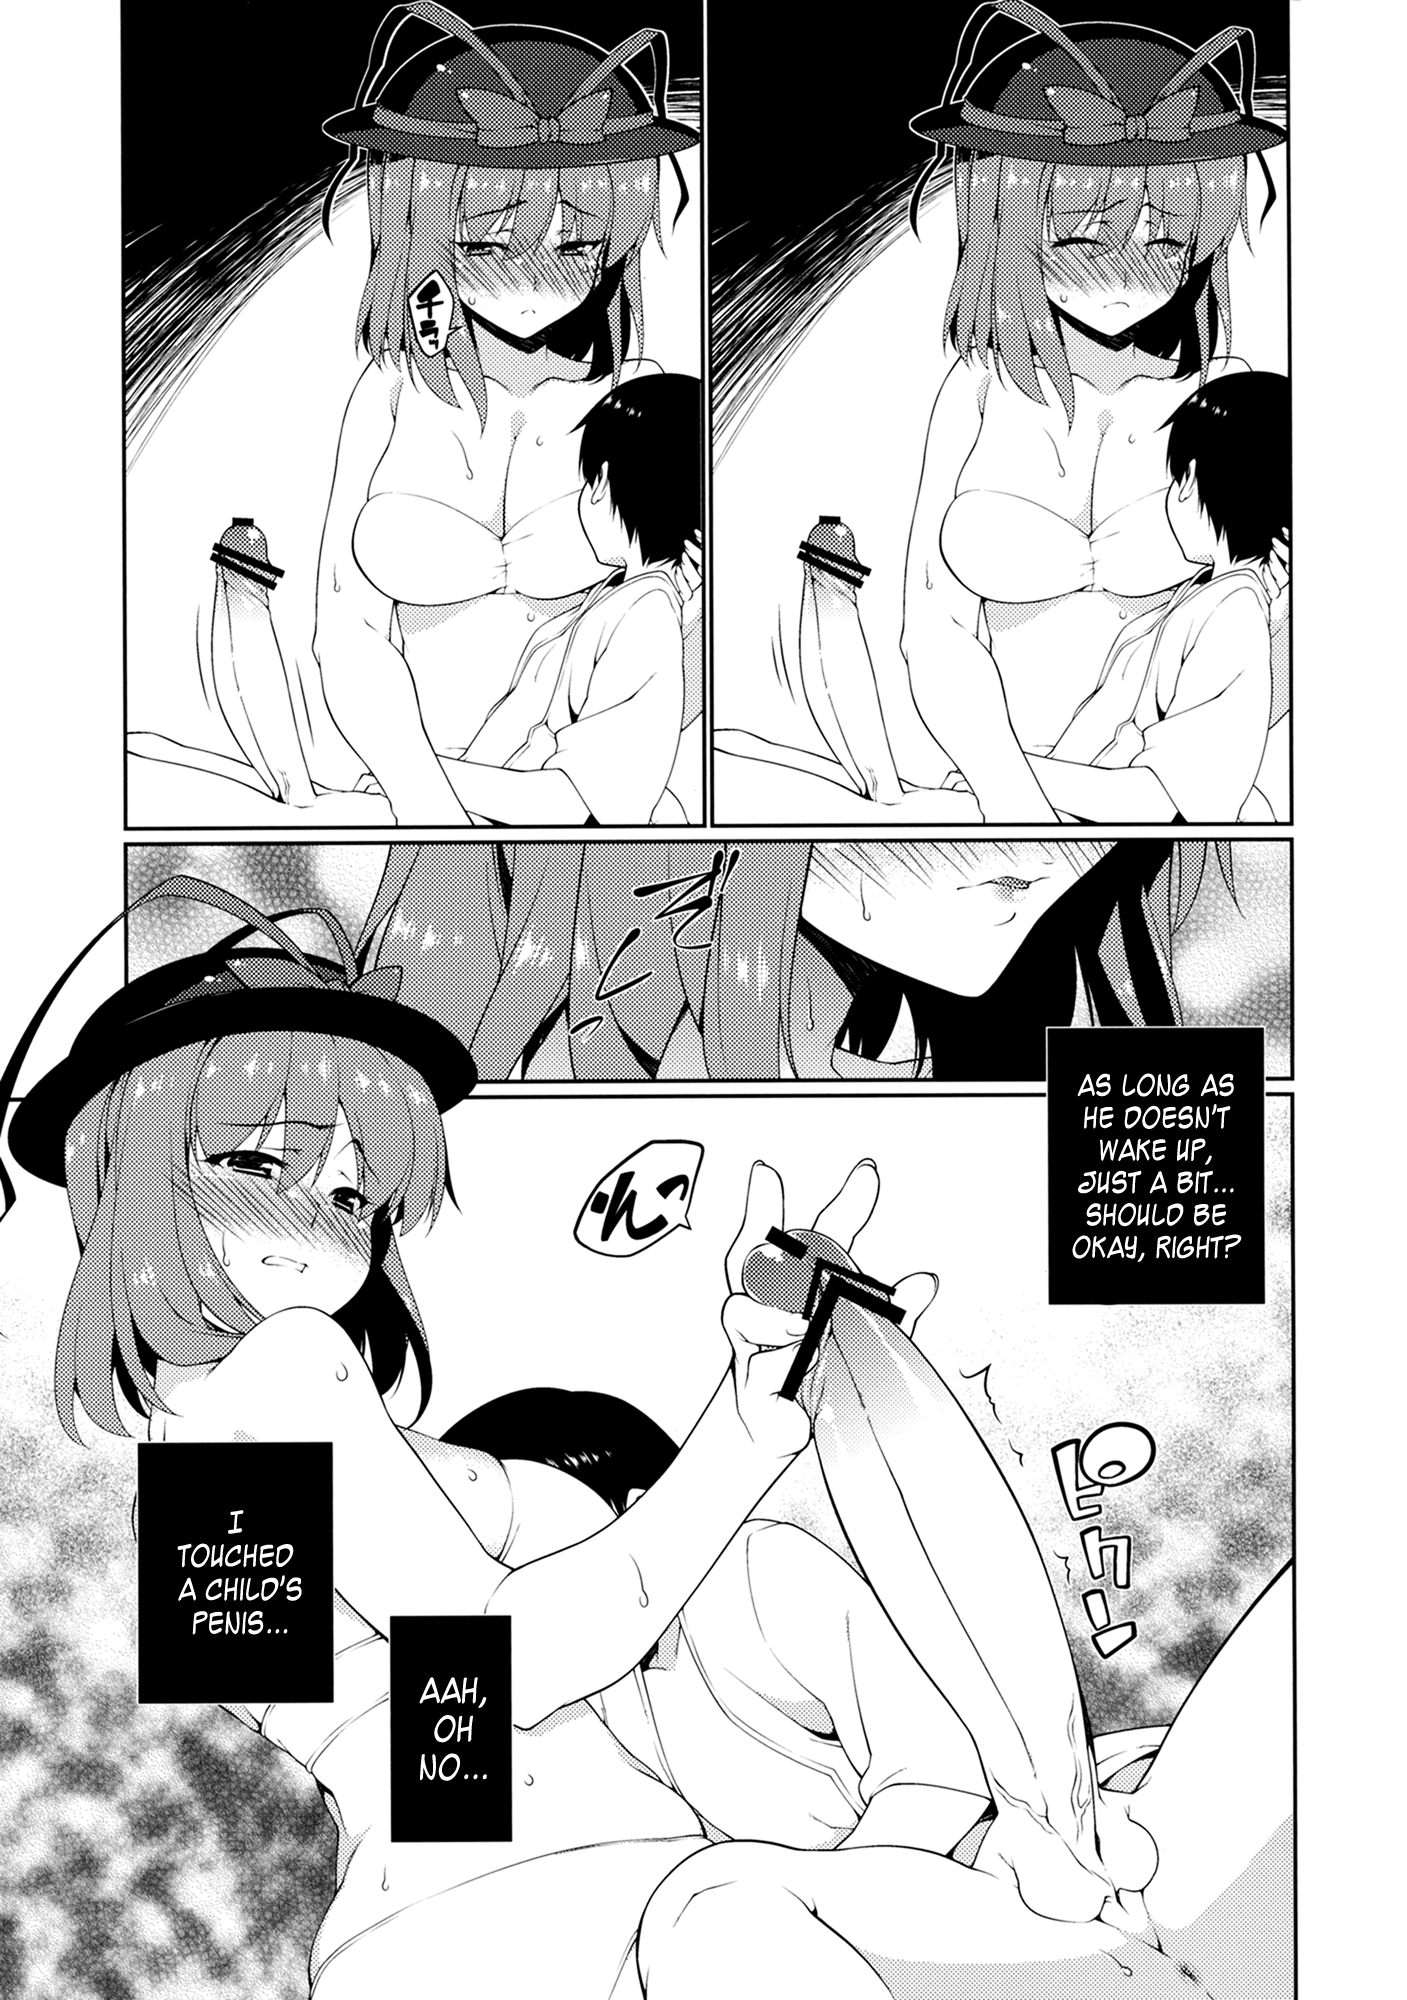 HI-Sexual Under Age hentai manga picture 6